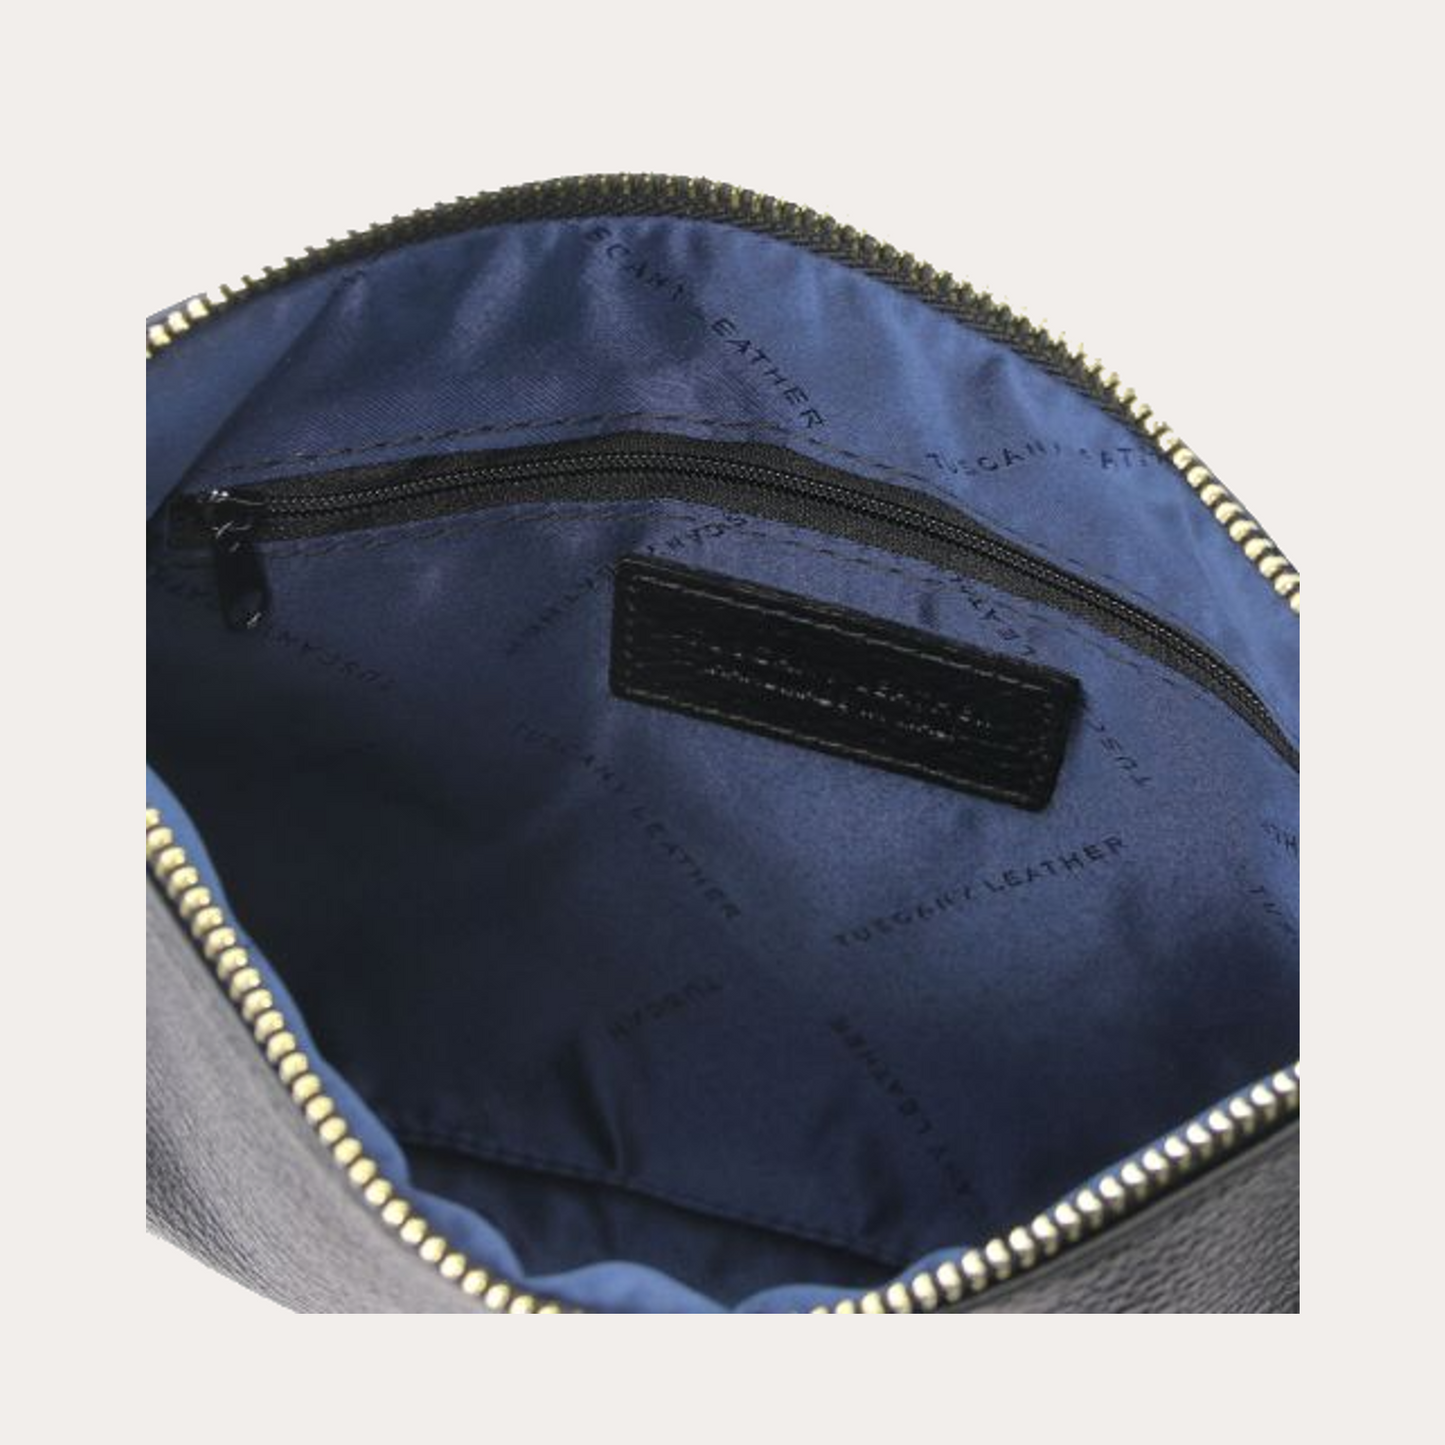 Tuscany Leather Soft Black Leather Clutch/Crossbody Bag